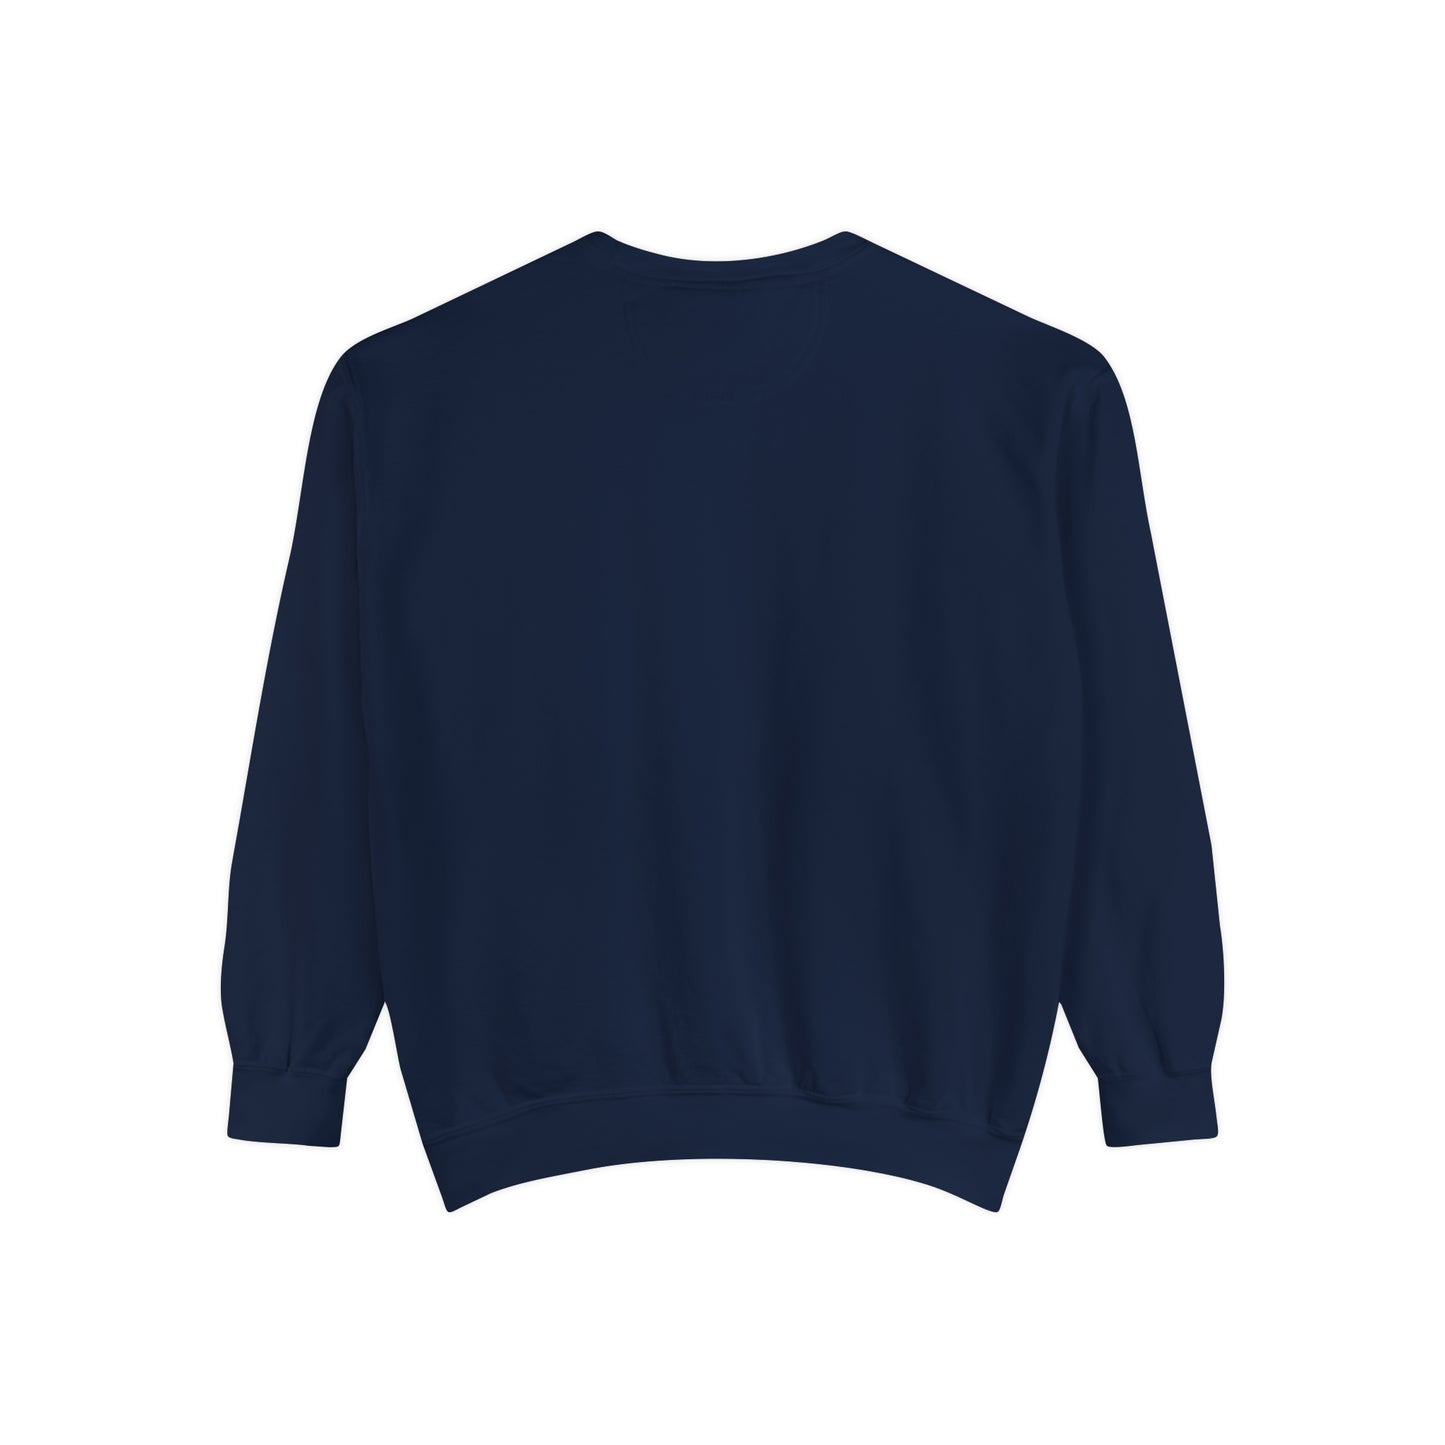 FALL BABE SWEATSHIRT Unisex Garment-Dyed Sweatshirt